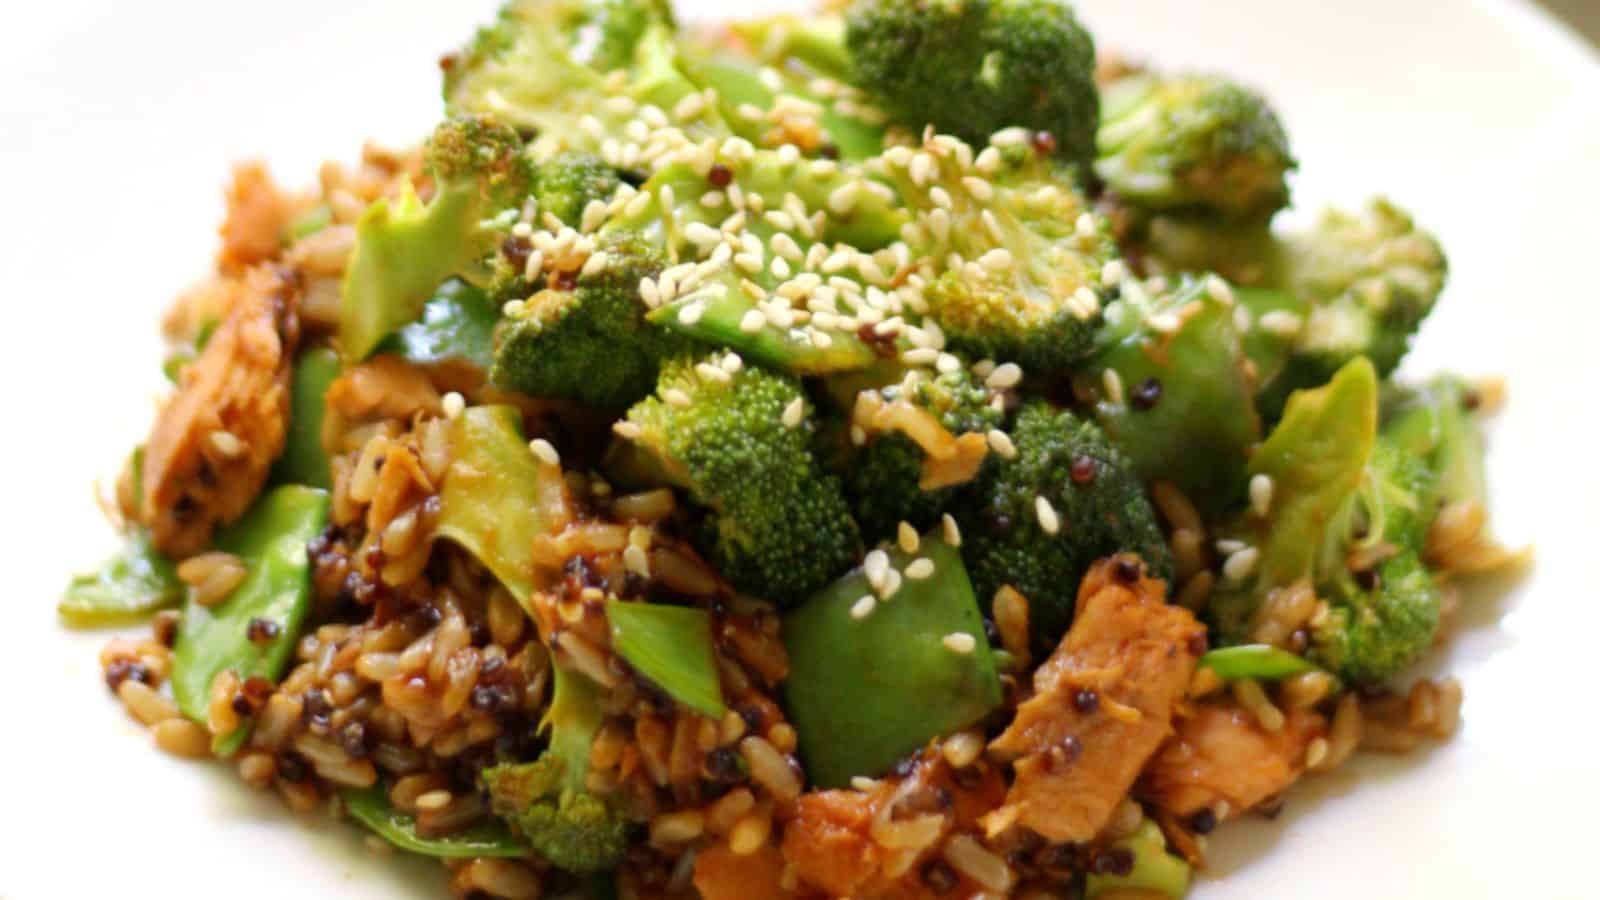 A plate with broccoli, salmon and sesame seeds.